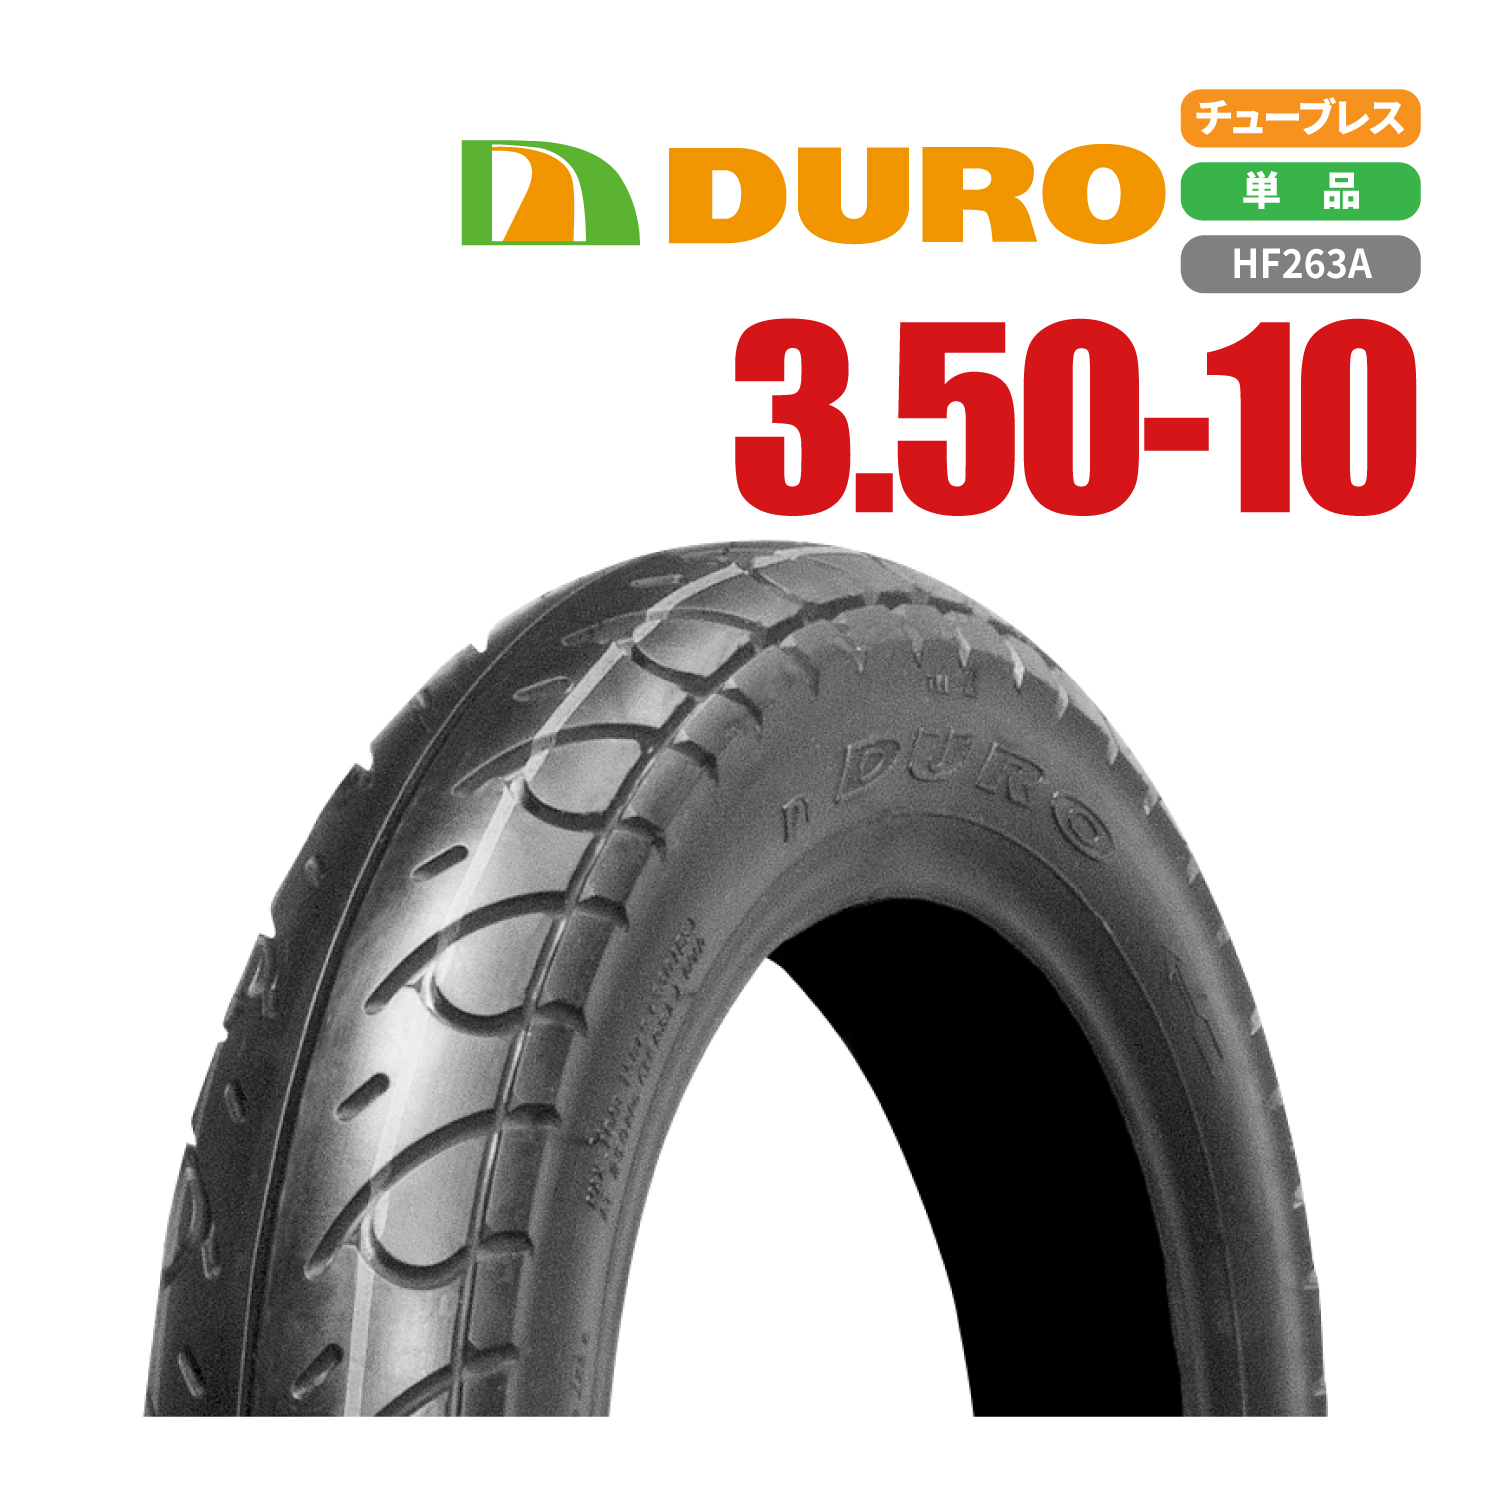  bike tire DURO tire 3.50-10 51J HF263A T/L 350-10 bike parts center 